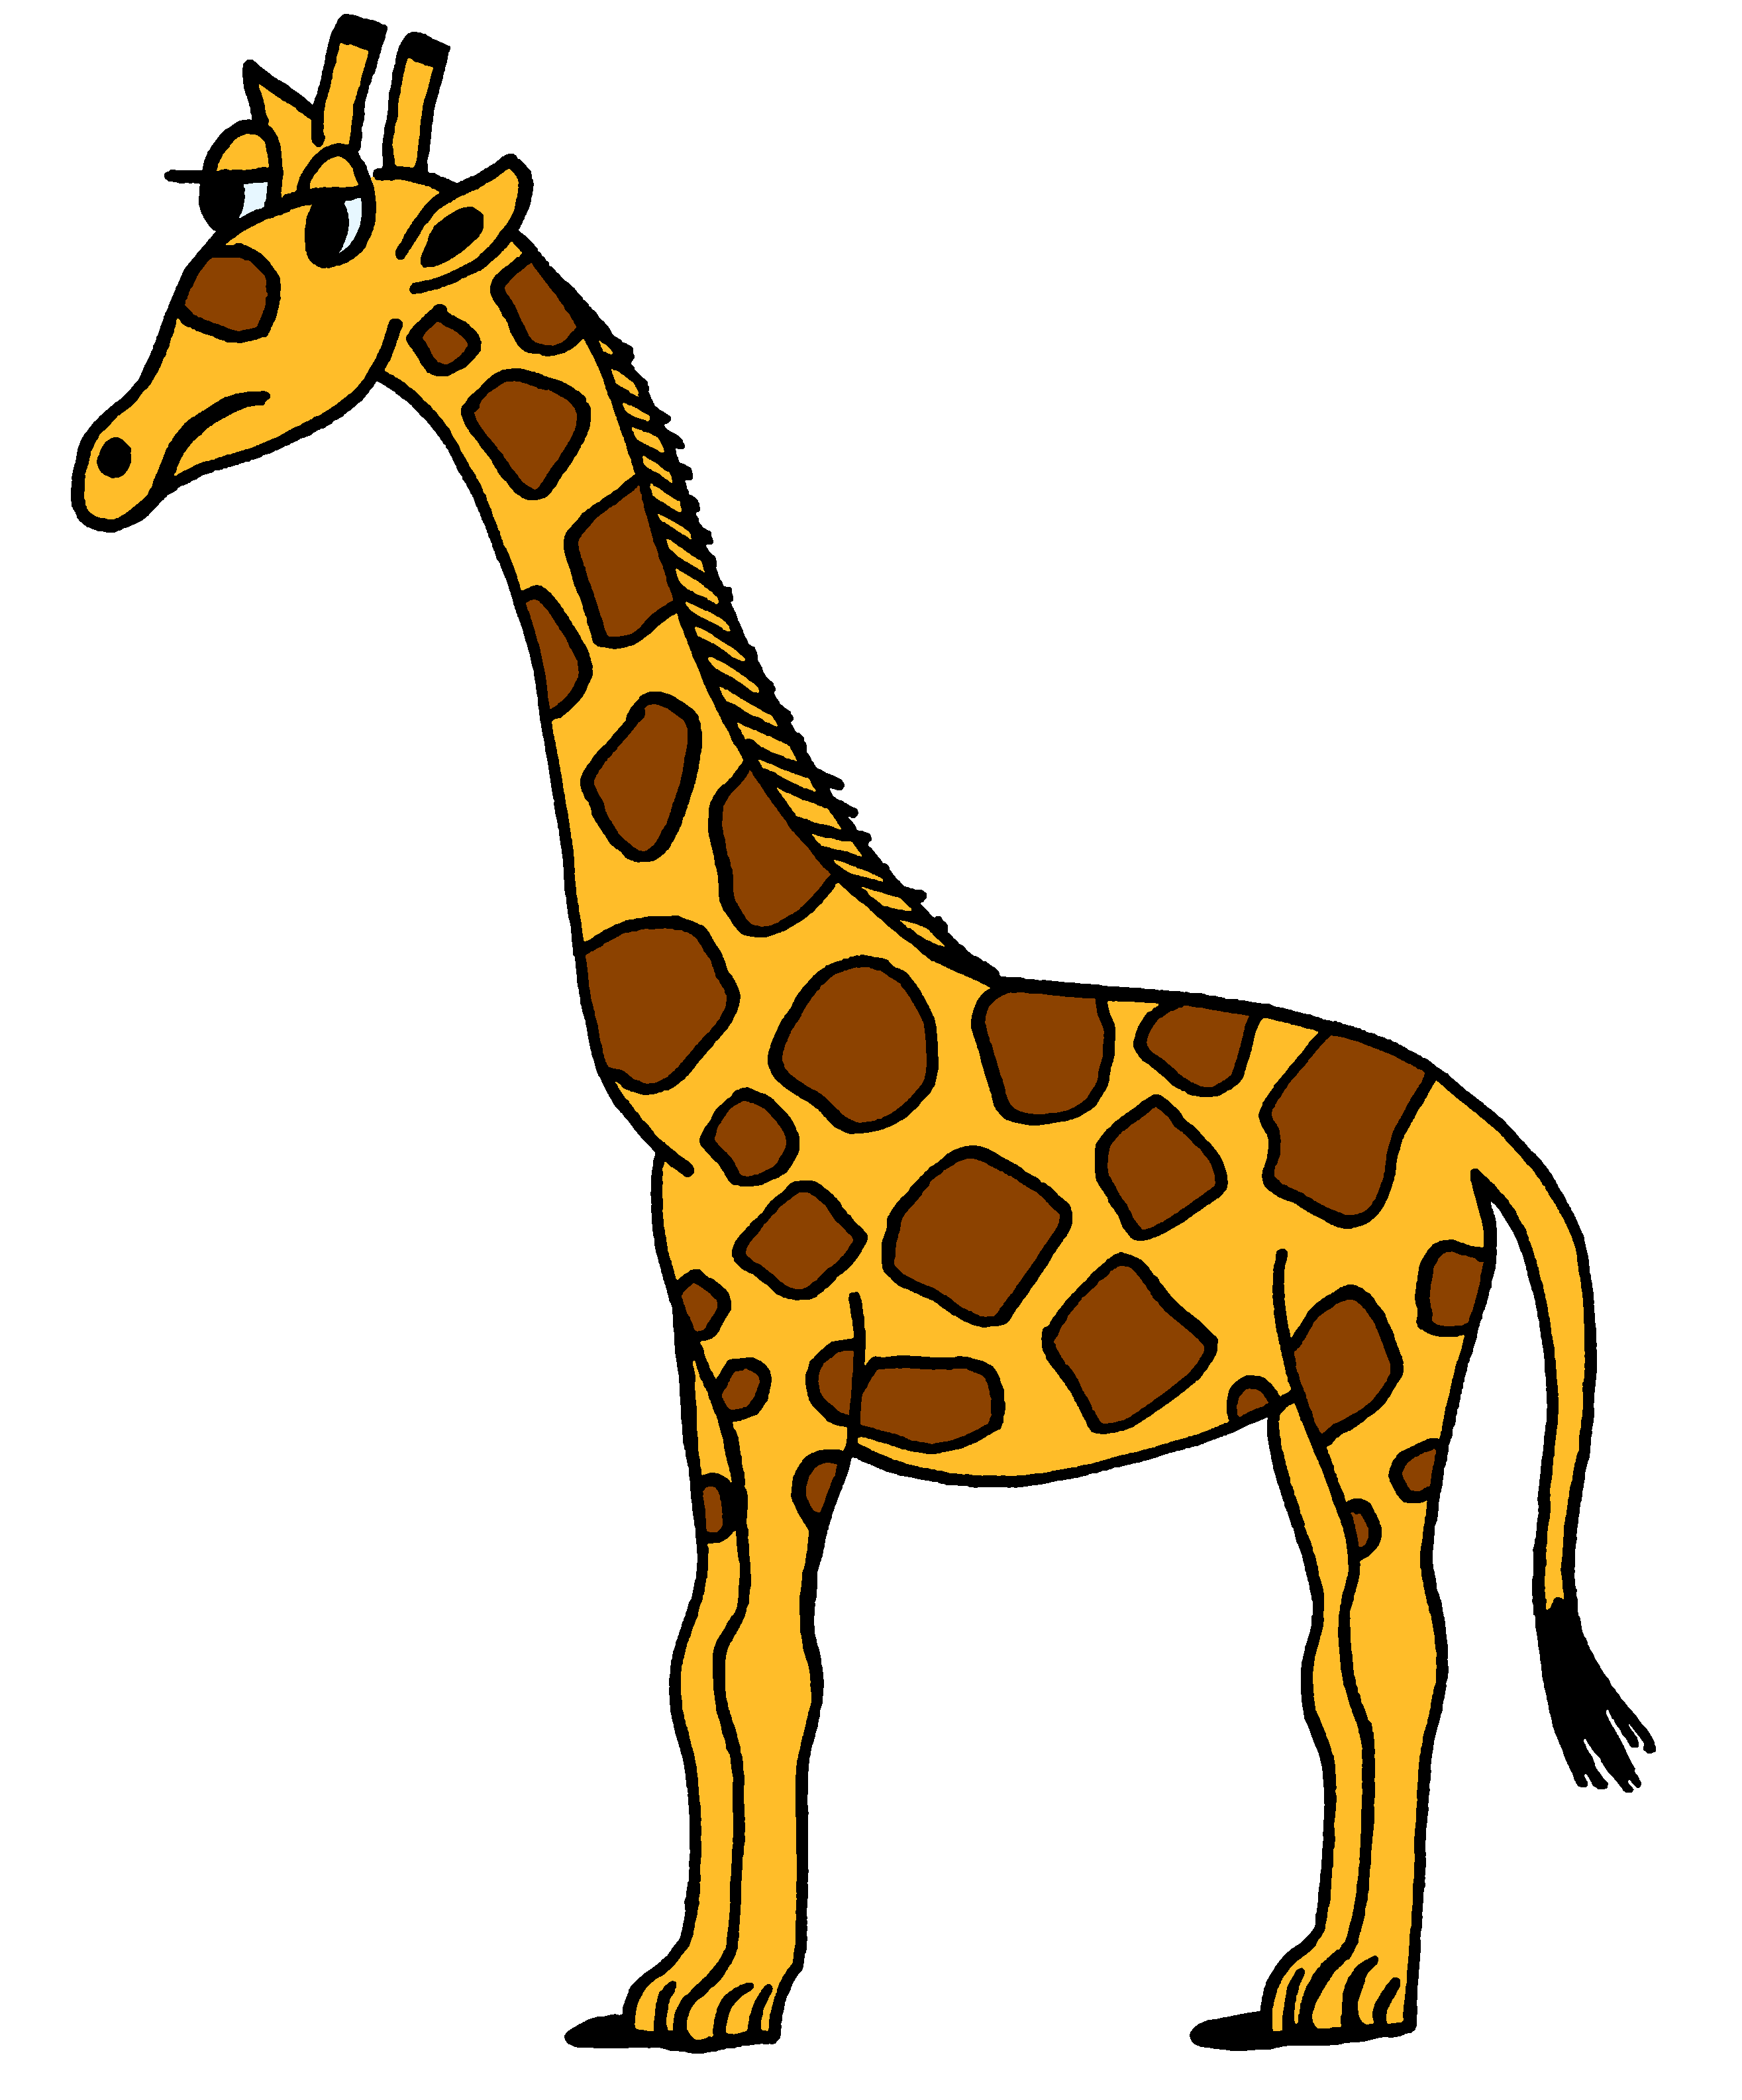 Giraffe clipart for bedrooms - ClipartFox